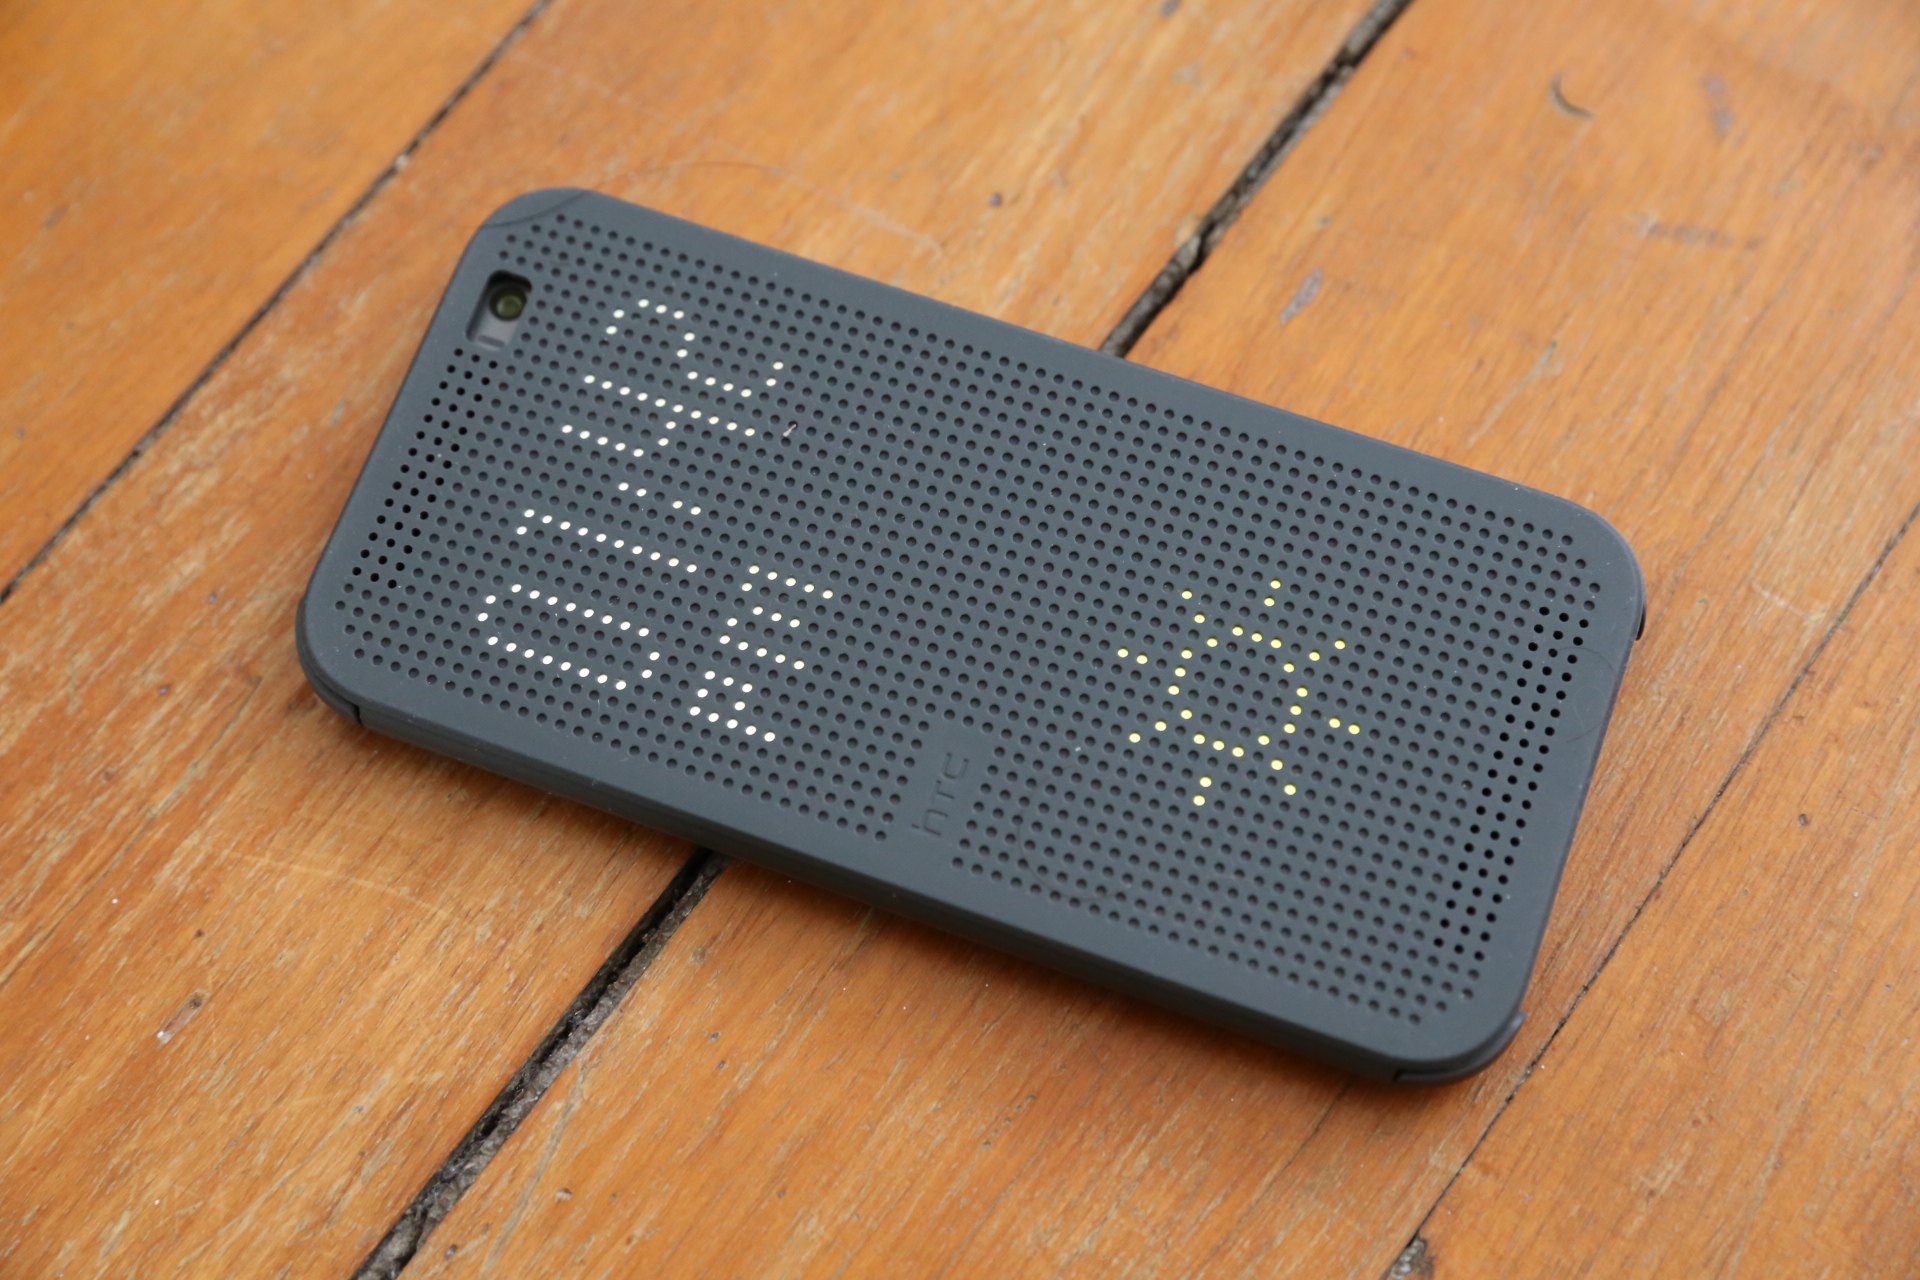 HTC-One-M8-Case-On